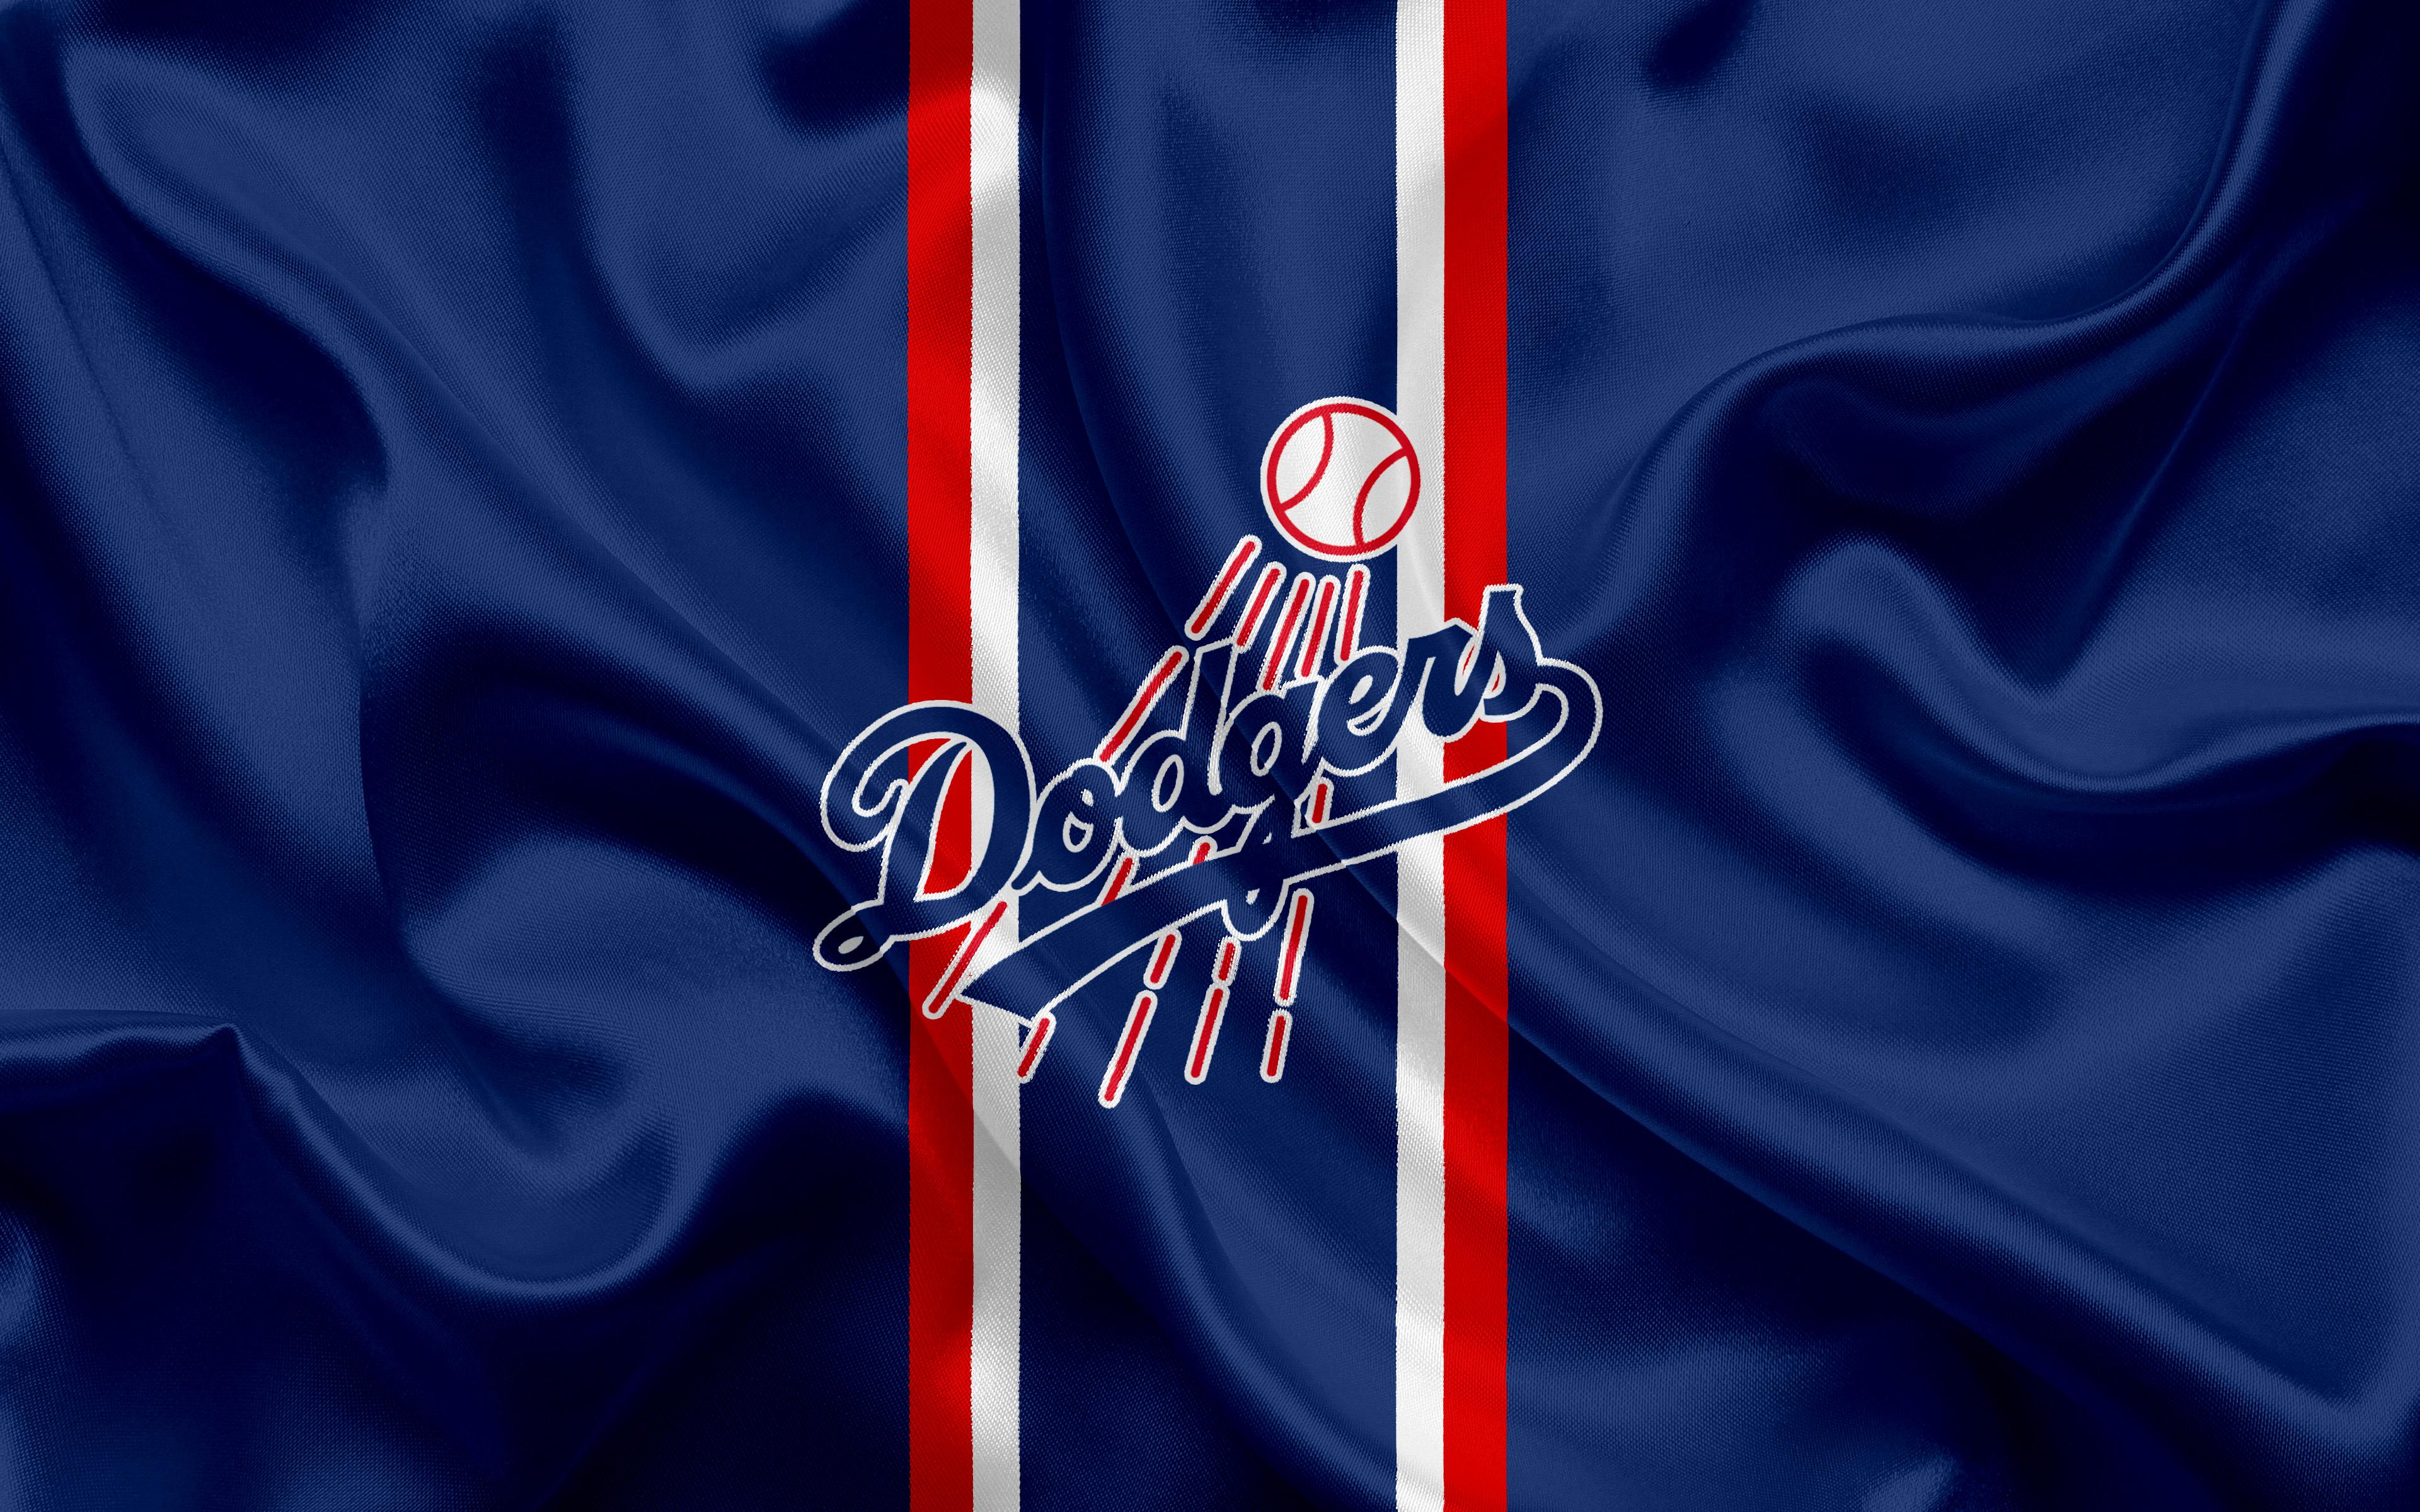 Los Angeles Dodgers 4k Ultra HD Wallpaper. Background Image